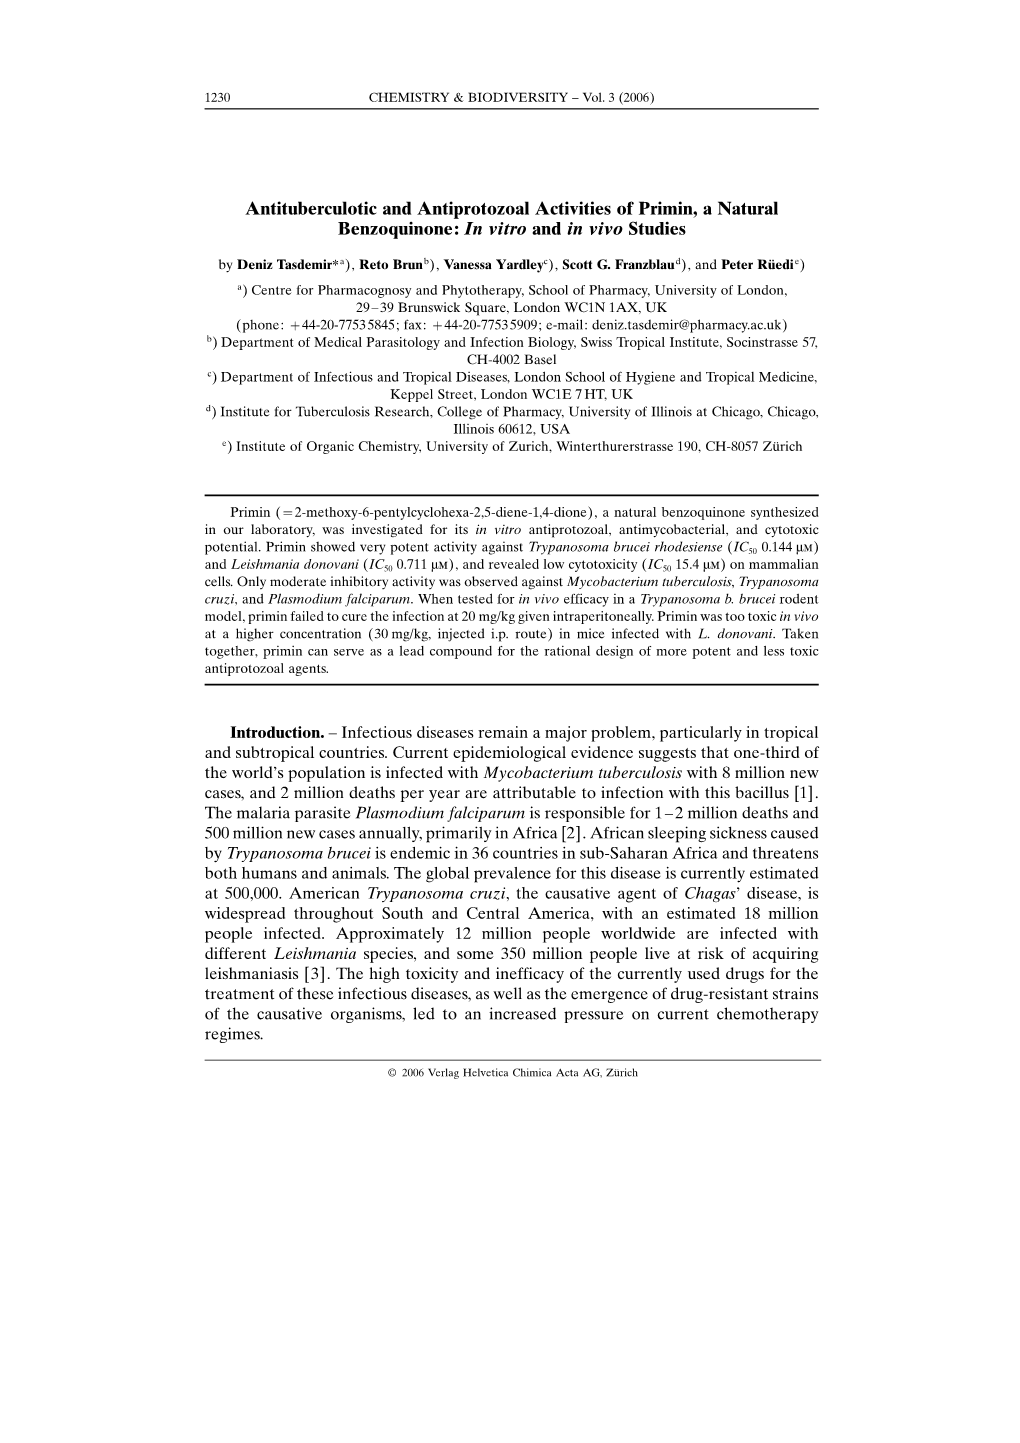 Antituberculotic and Antiprotozoal Activities of Primin, a Natural Benzoquinone: in Vitro and in Vivo Studies